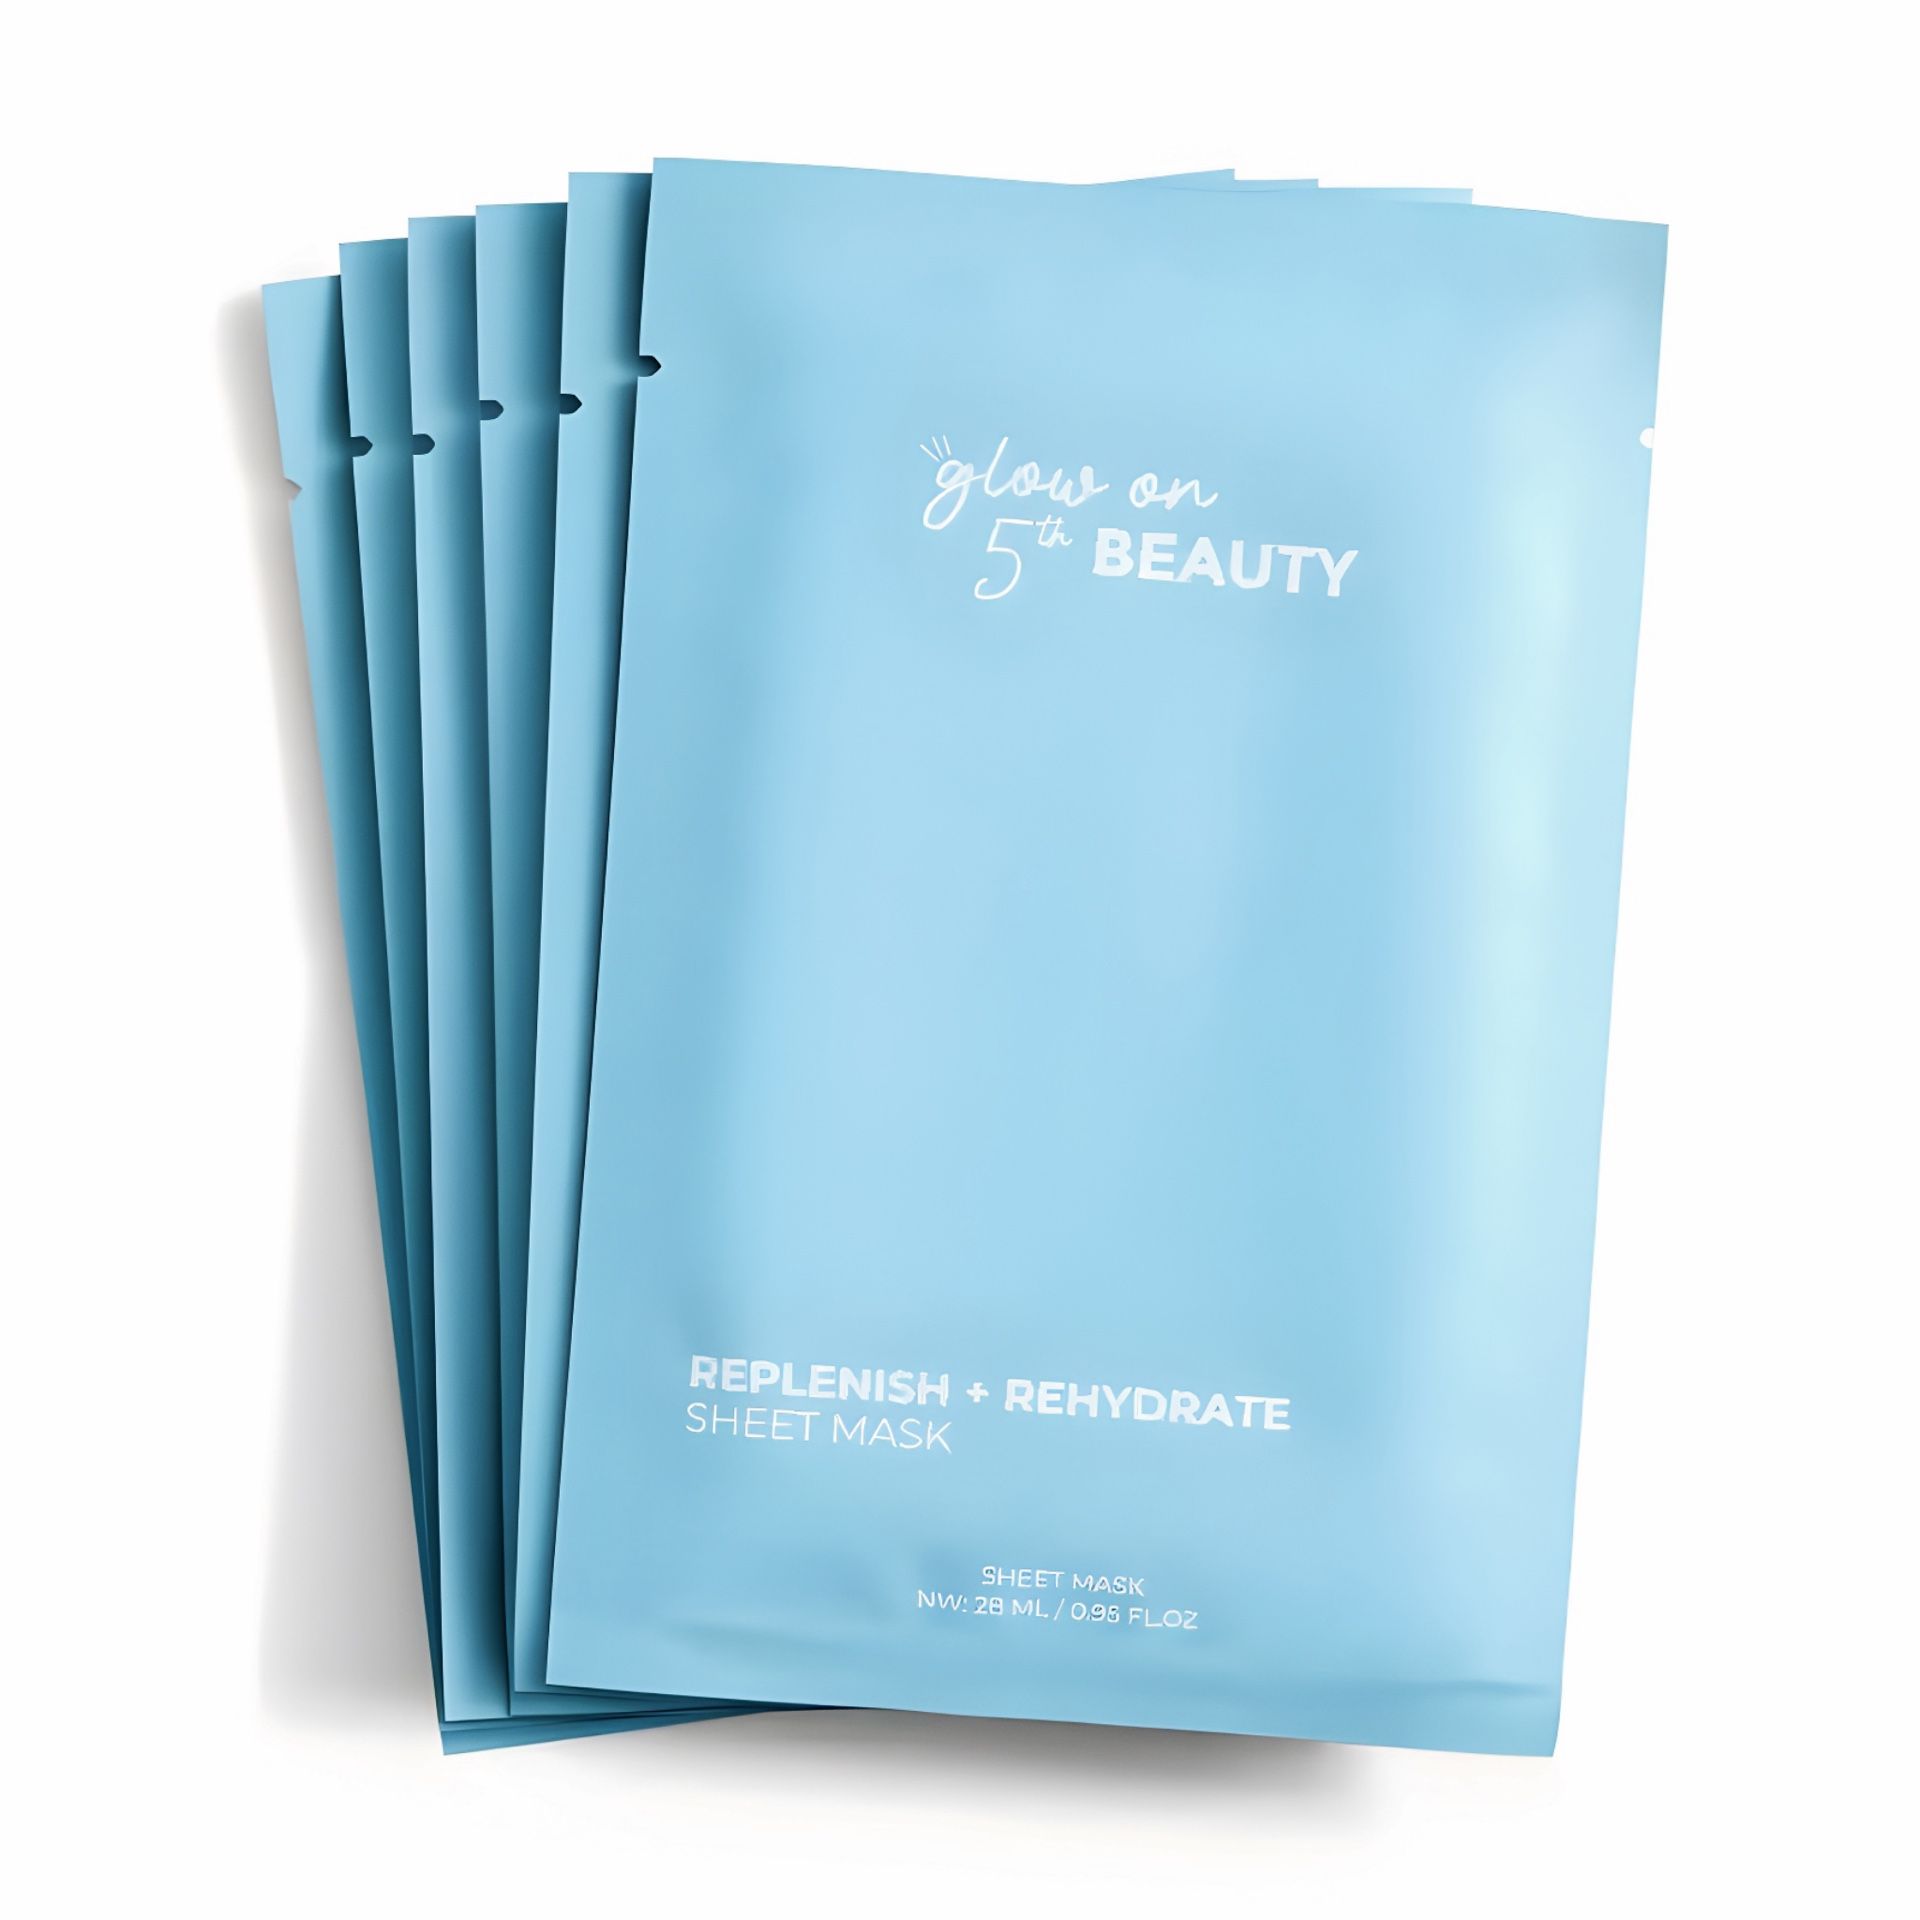 Nib Glow On 5th Replenish + Rehydrate Sheet Mask Set - New In Box 6 Ct